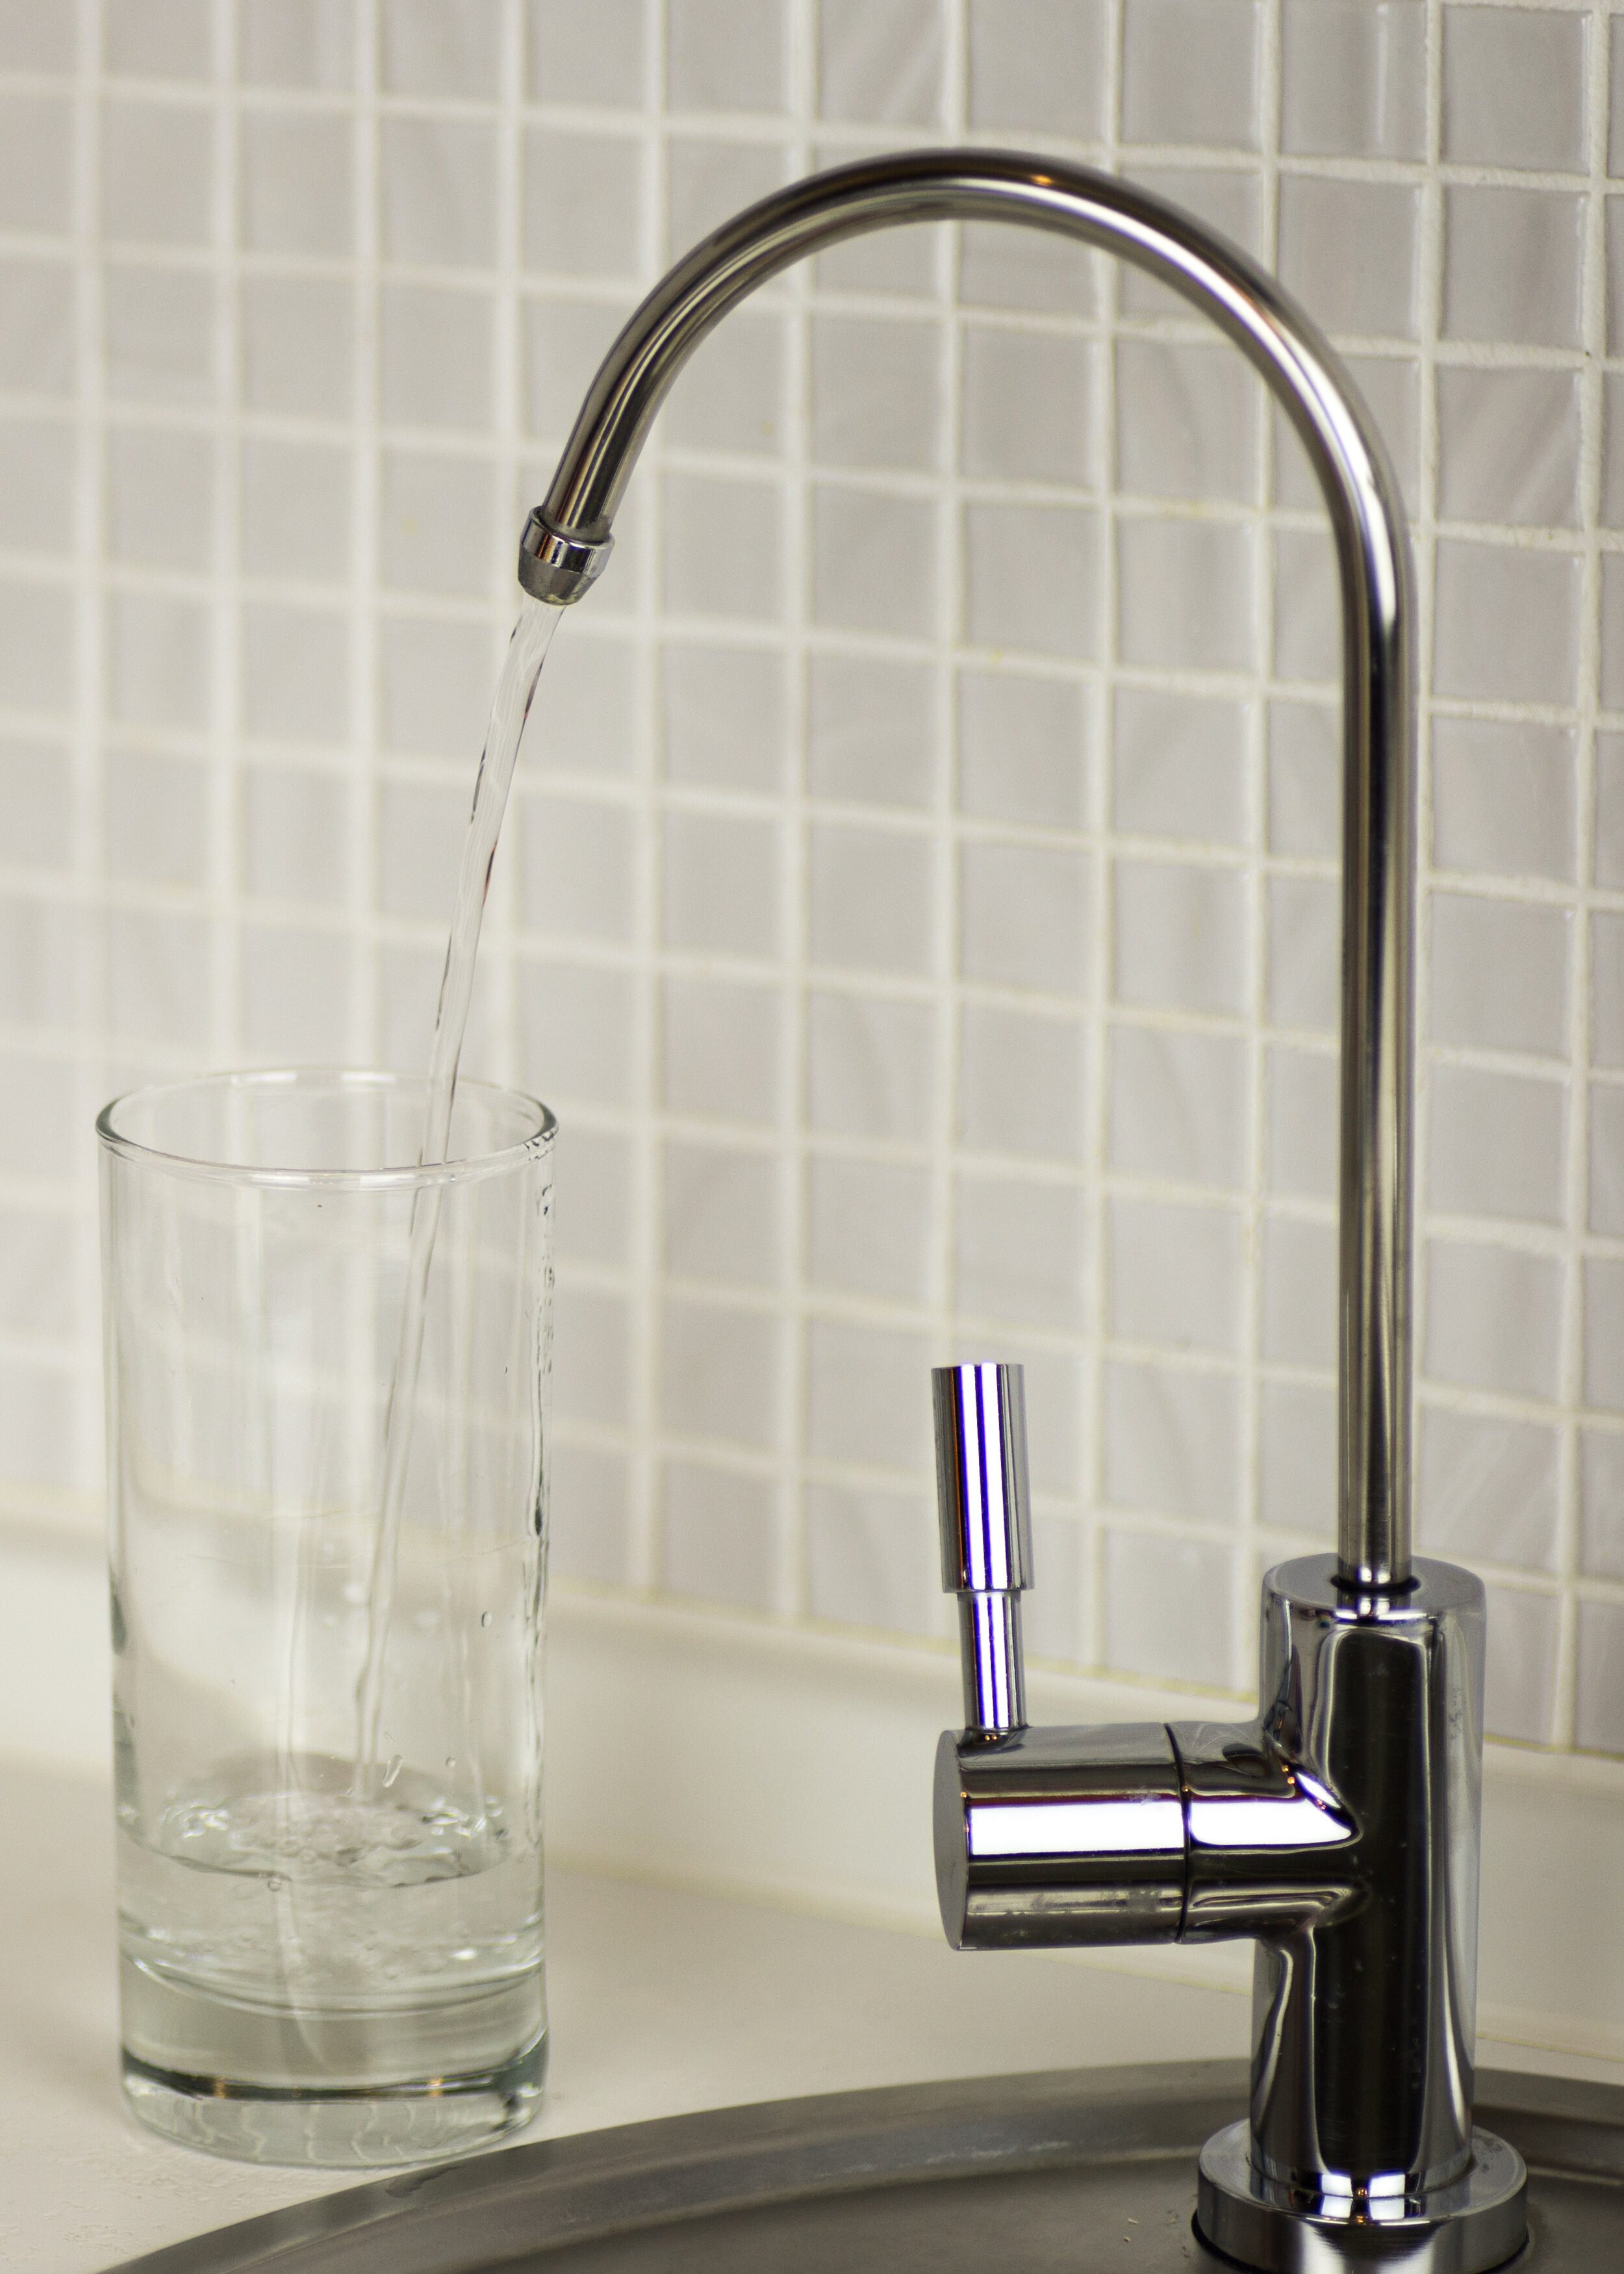 water-faucet-kitchen.jpg